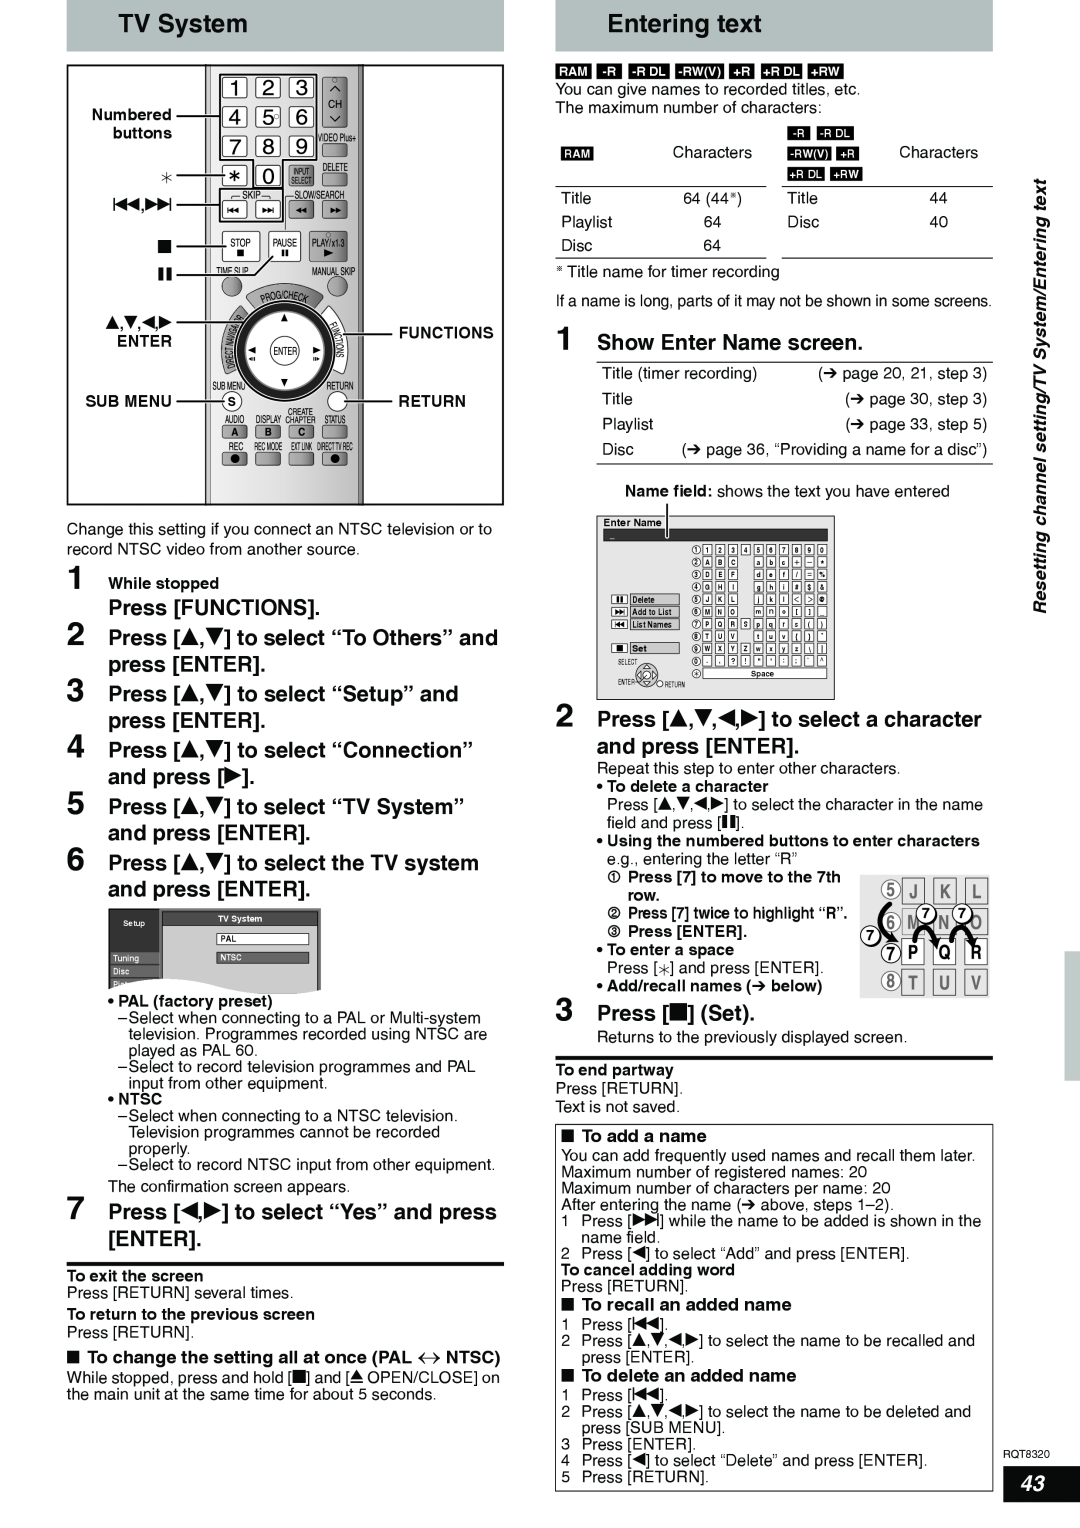 Panasonic DMR-ES15EB manual Press e,r to select “Connection”, and press q, Press e,r to select “TV System”, and press ENTER 